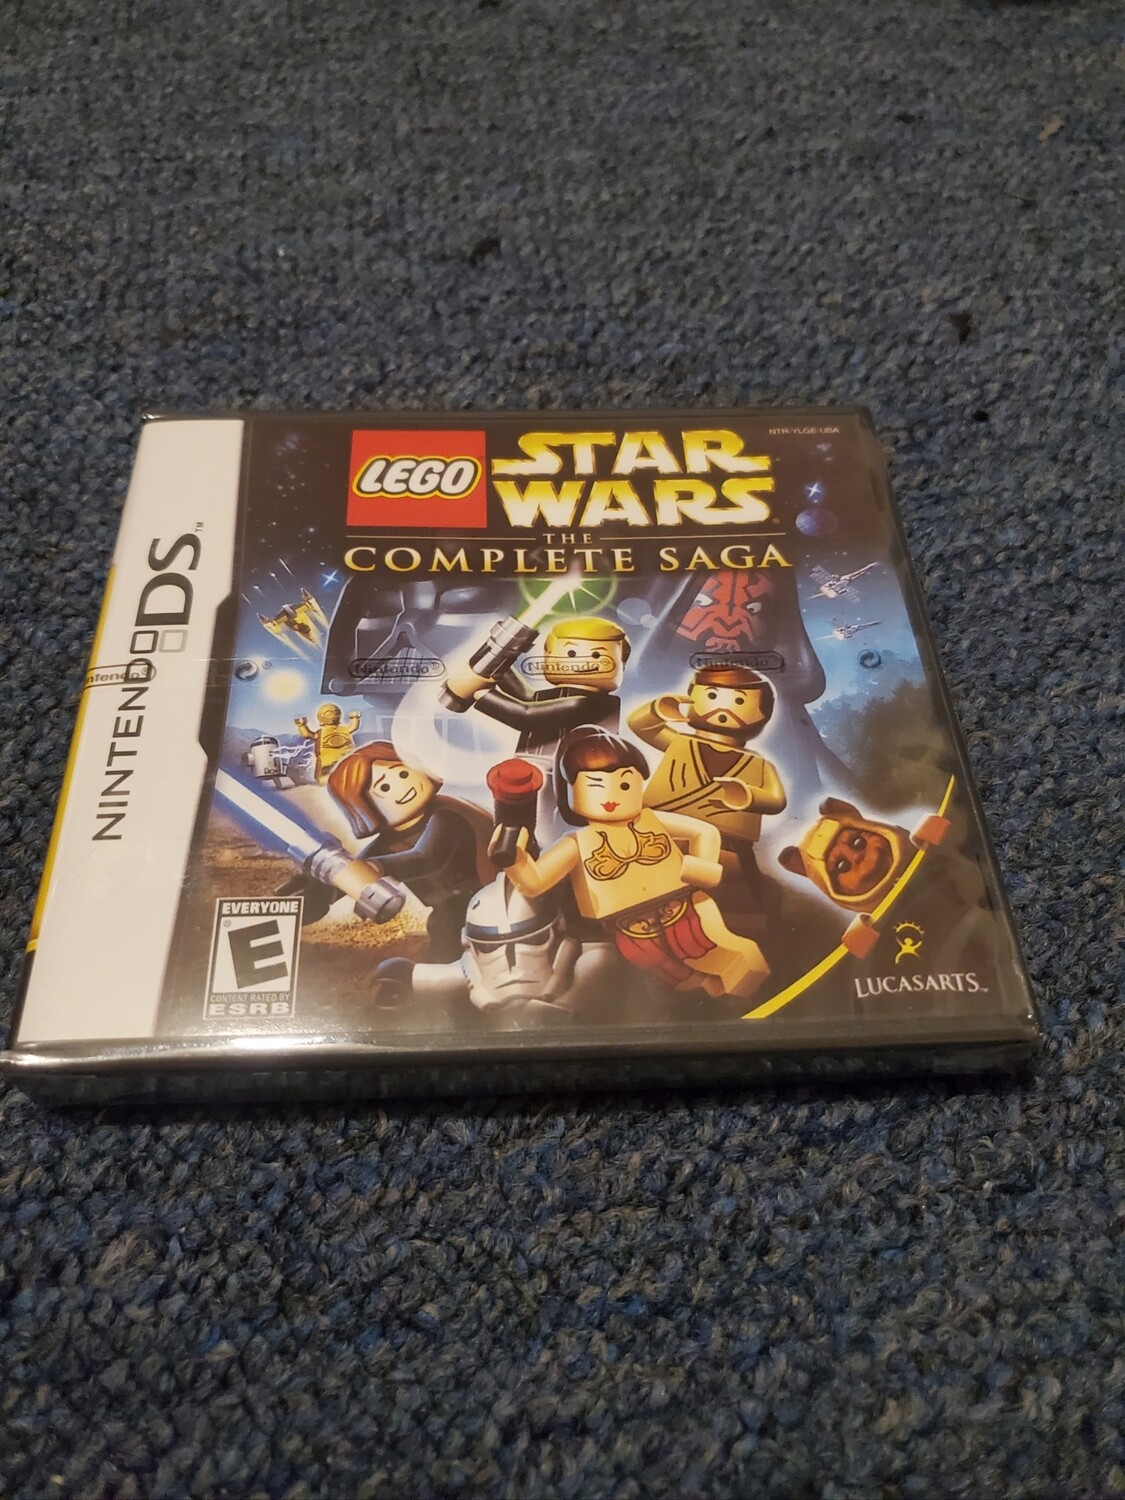 Lego Star Wars Complete Saga for Nintendo DS!